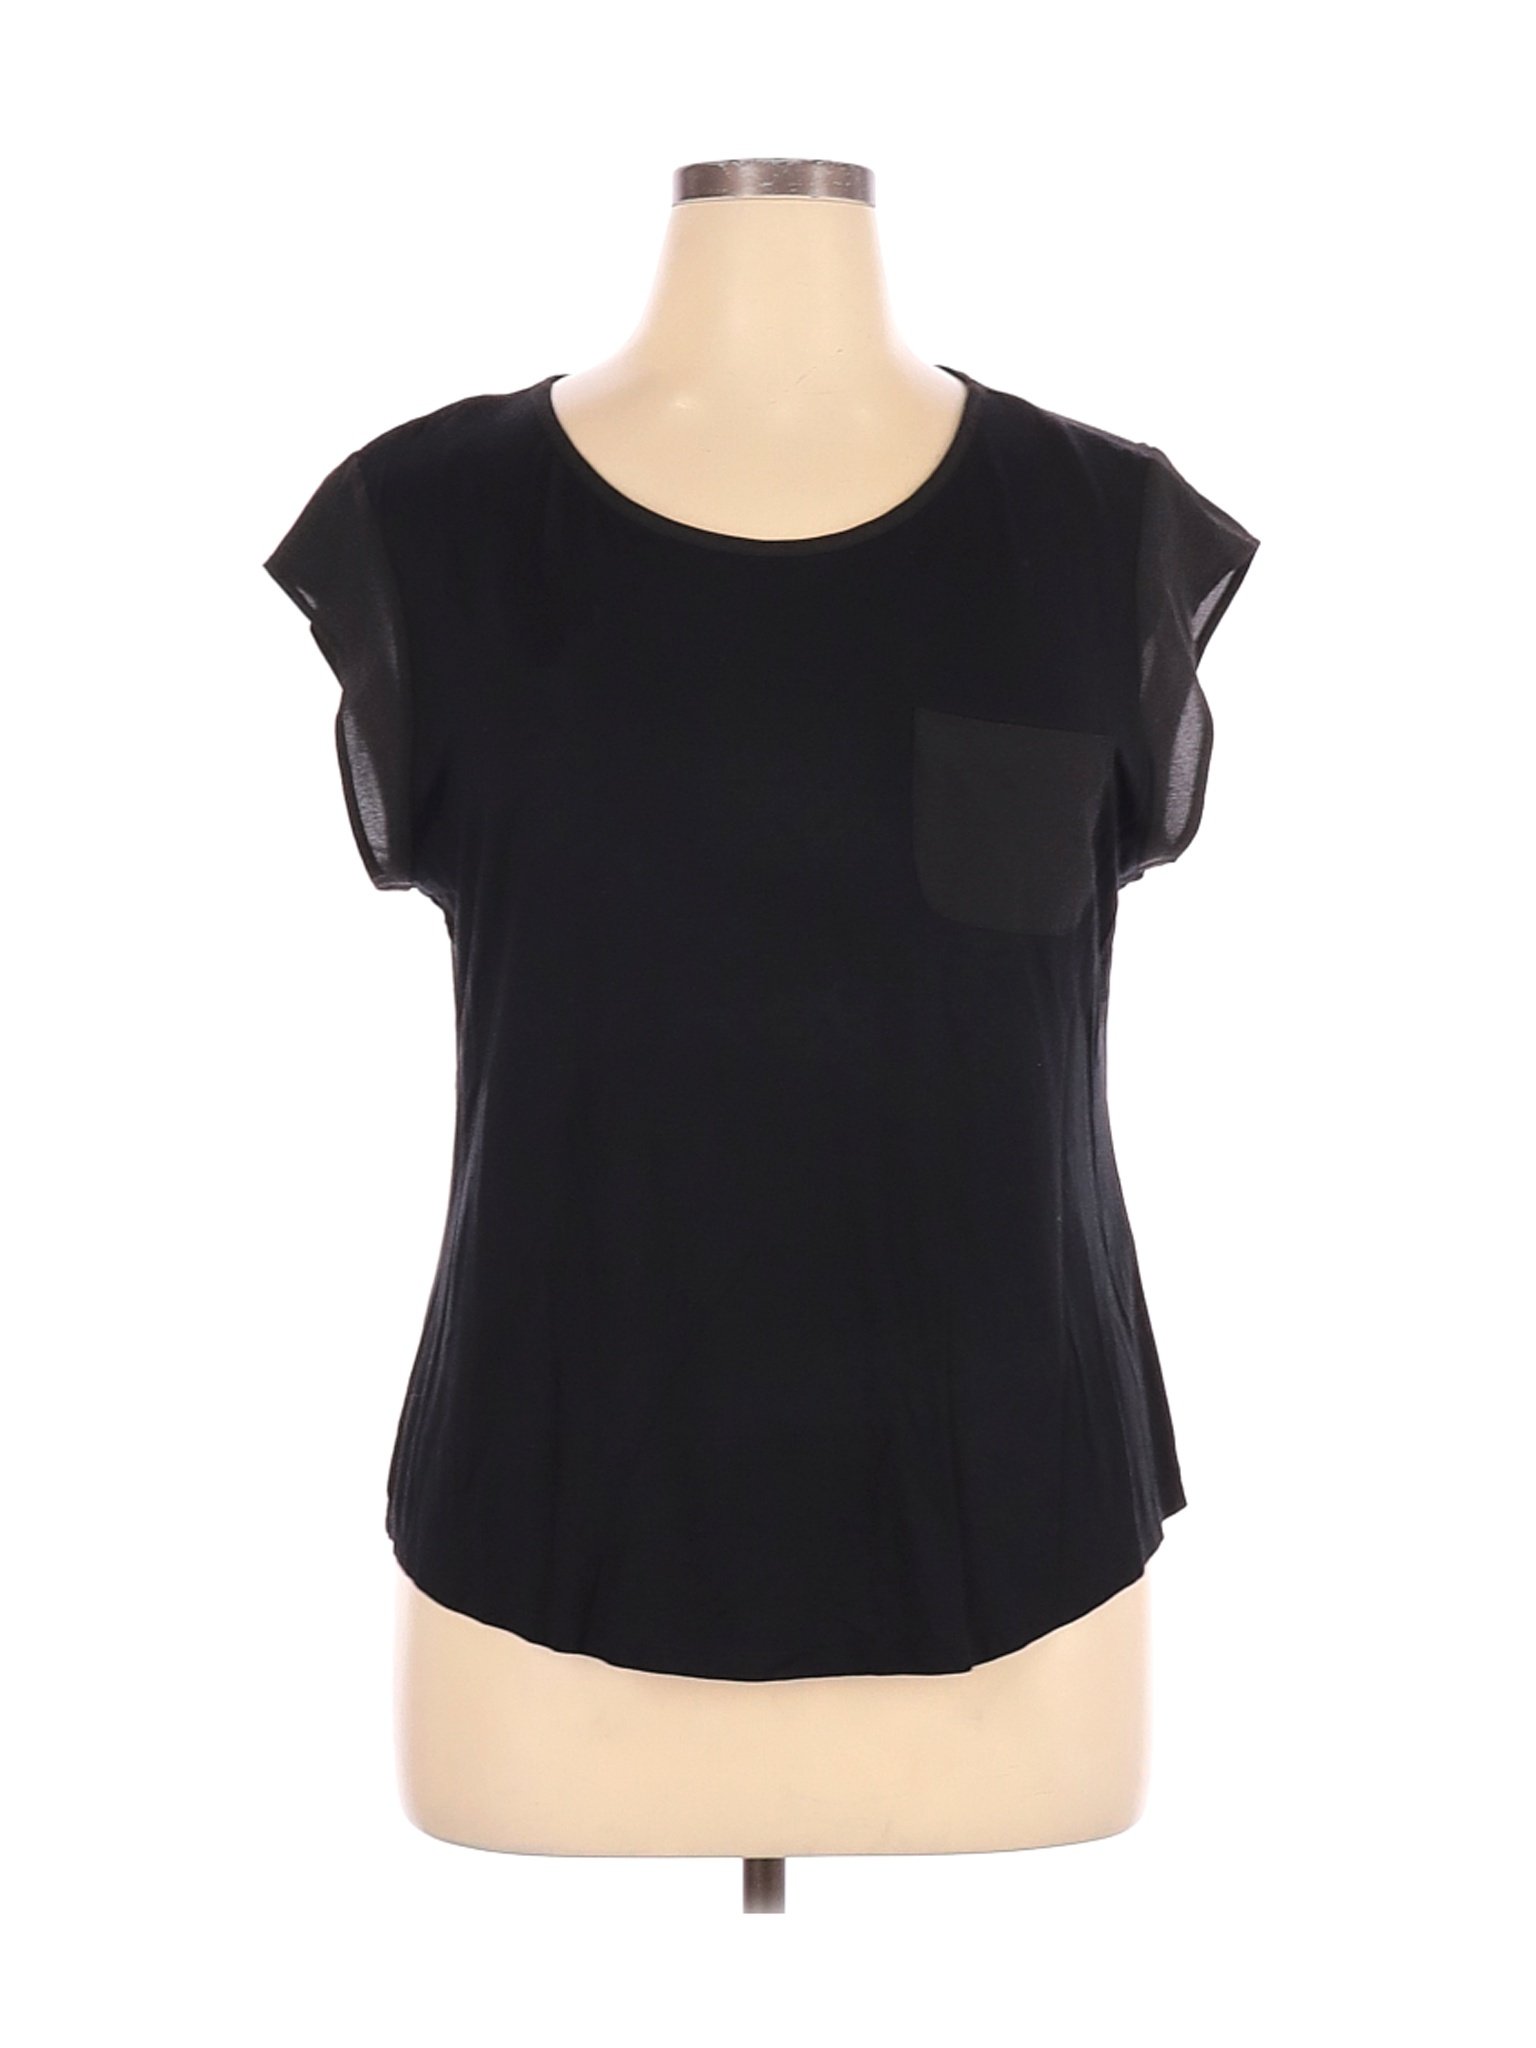 Calvin Klein Women Black Short Sleeve Blouse XL | eBay